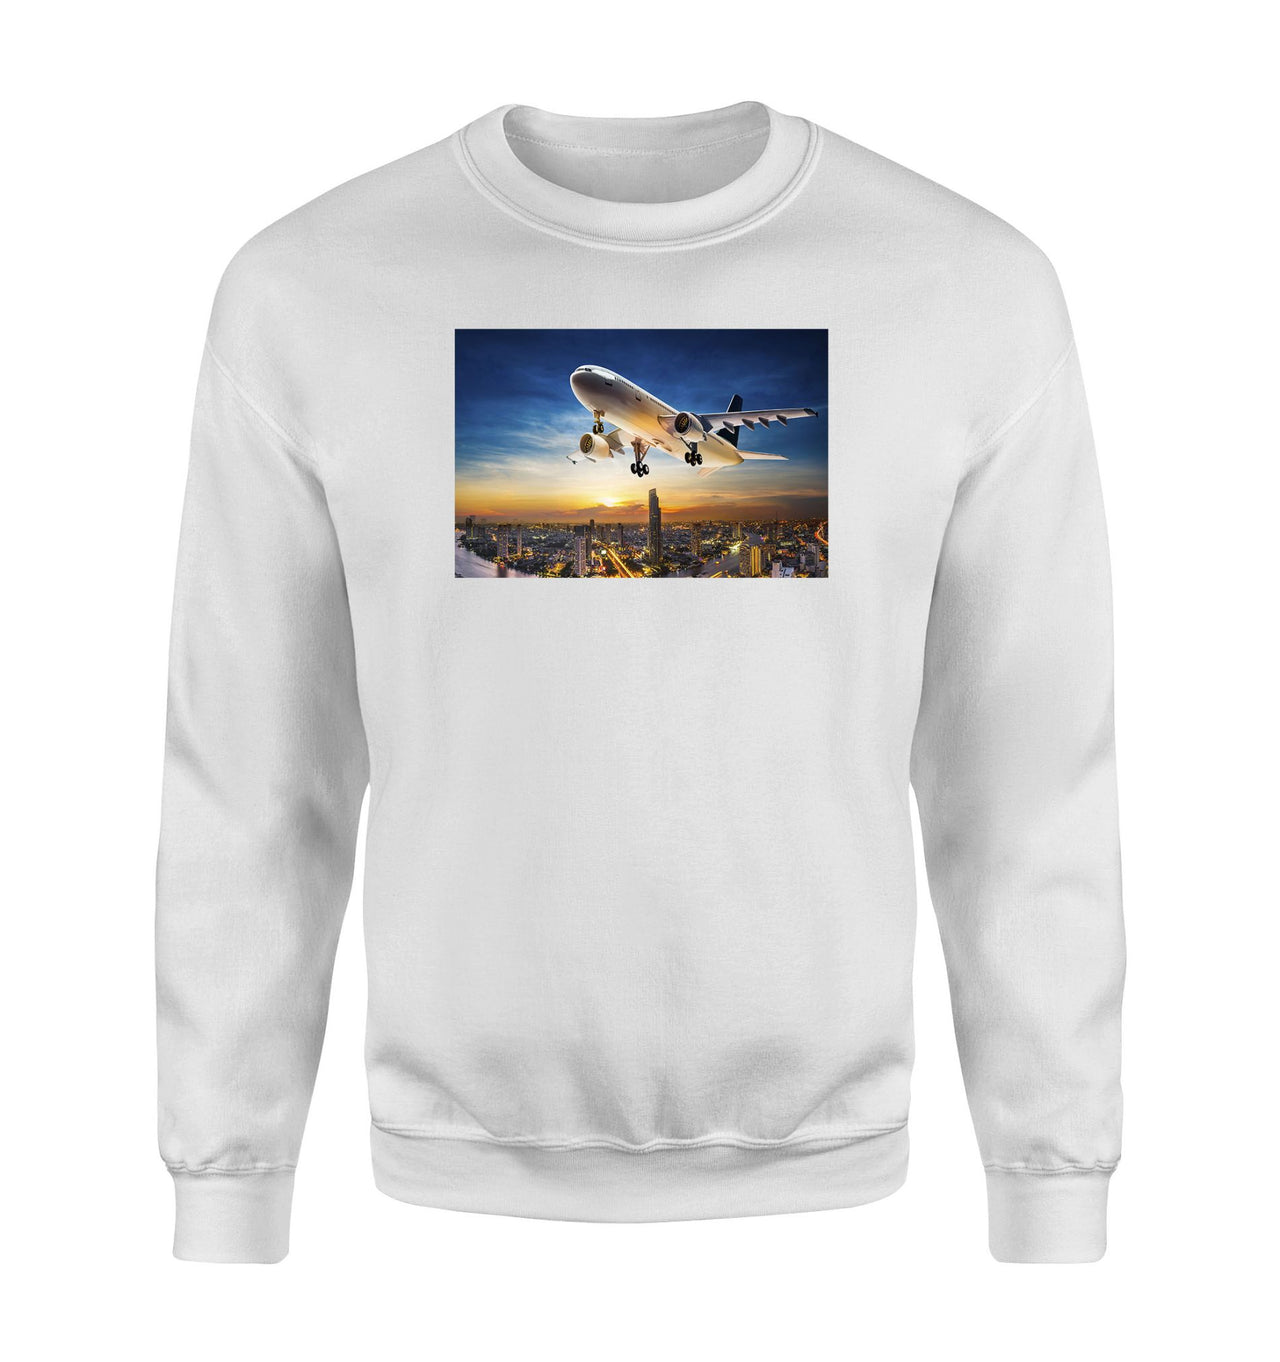 Super Aircraft over City at Sunset Designed Sweatshirts